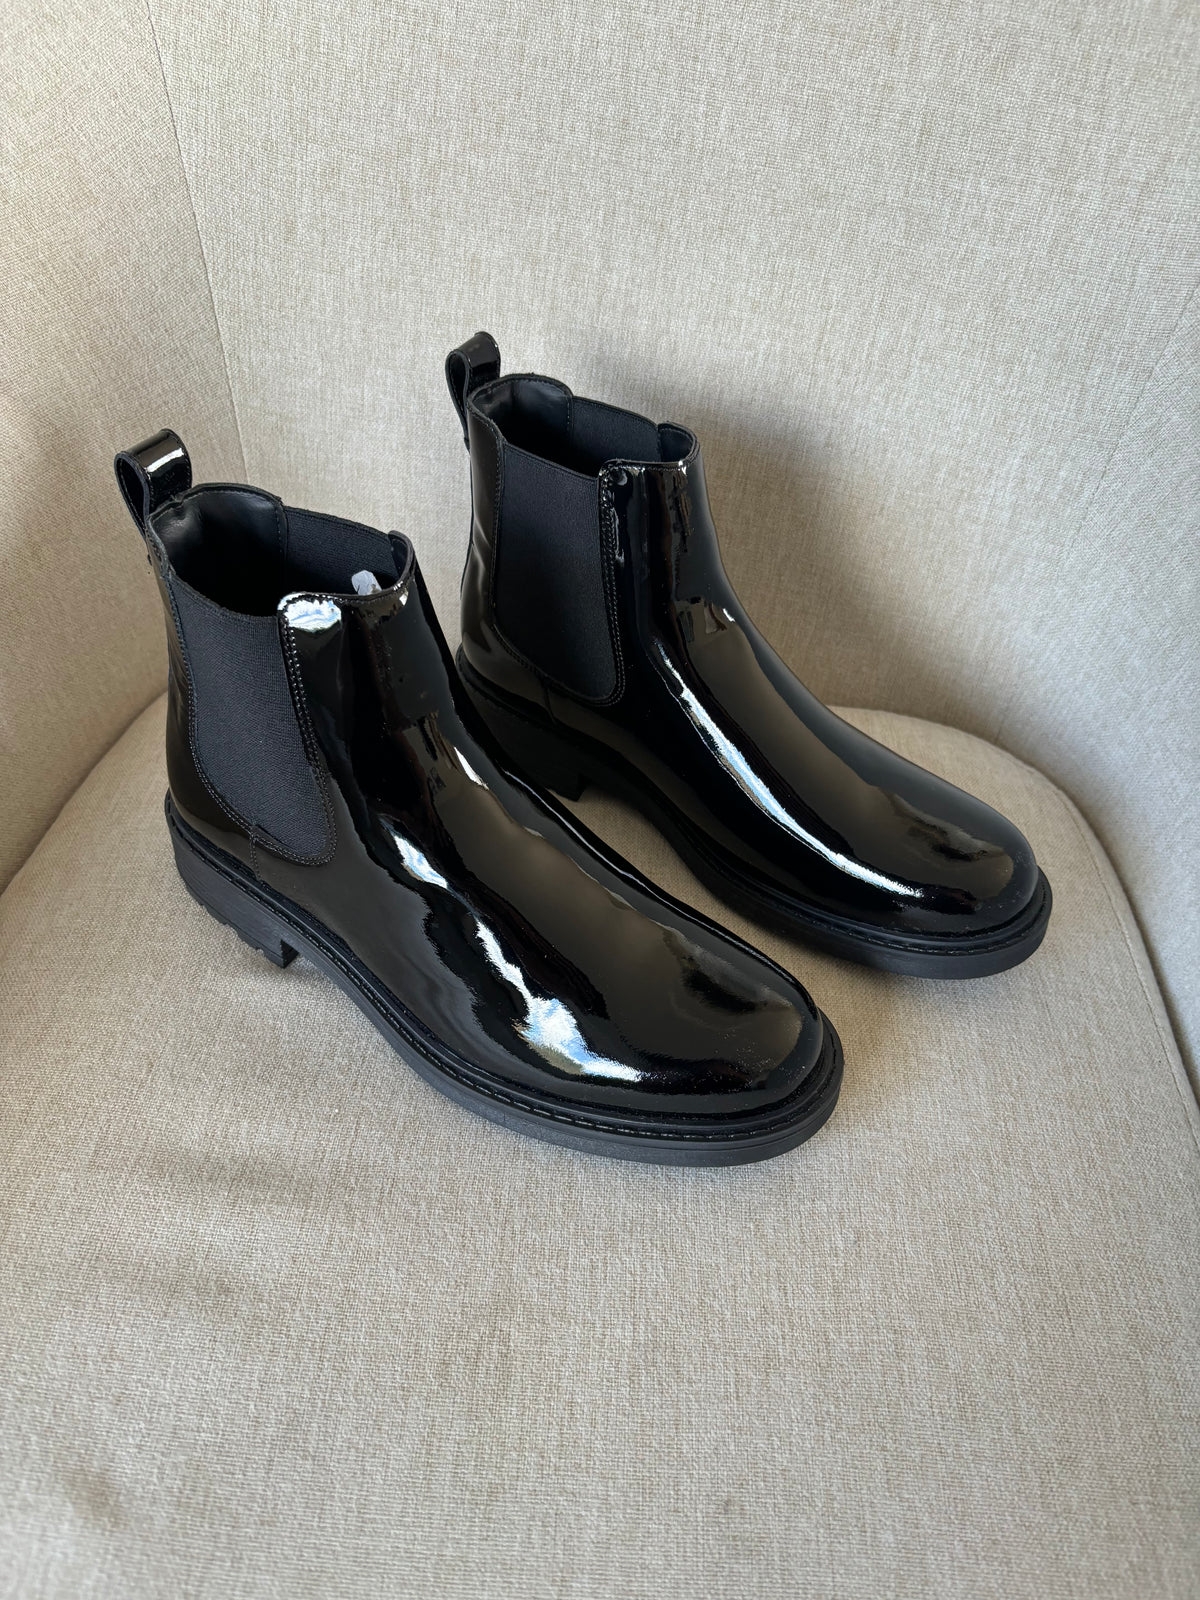 Black Patent Orinoco2 Lane Boots by Clarks Size 6D